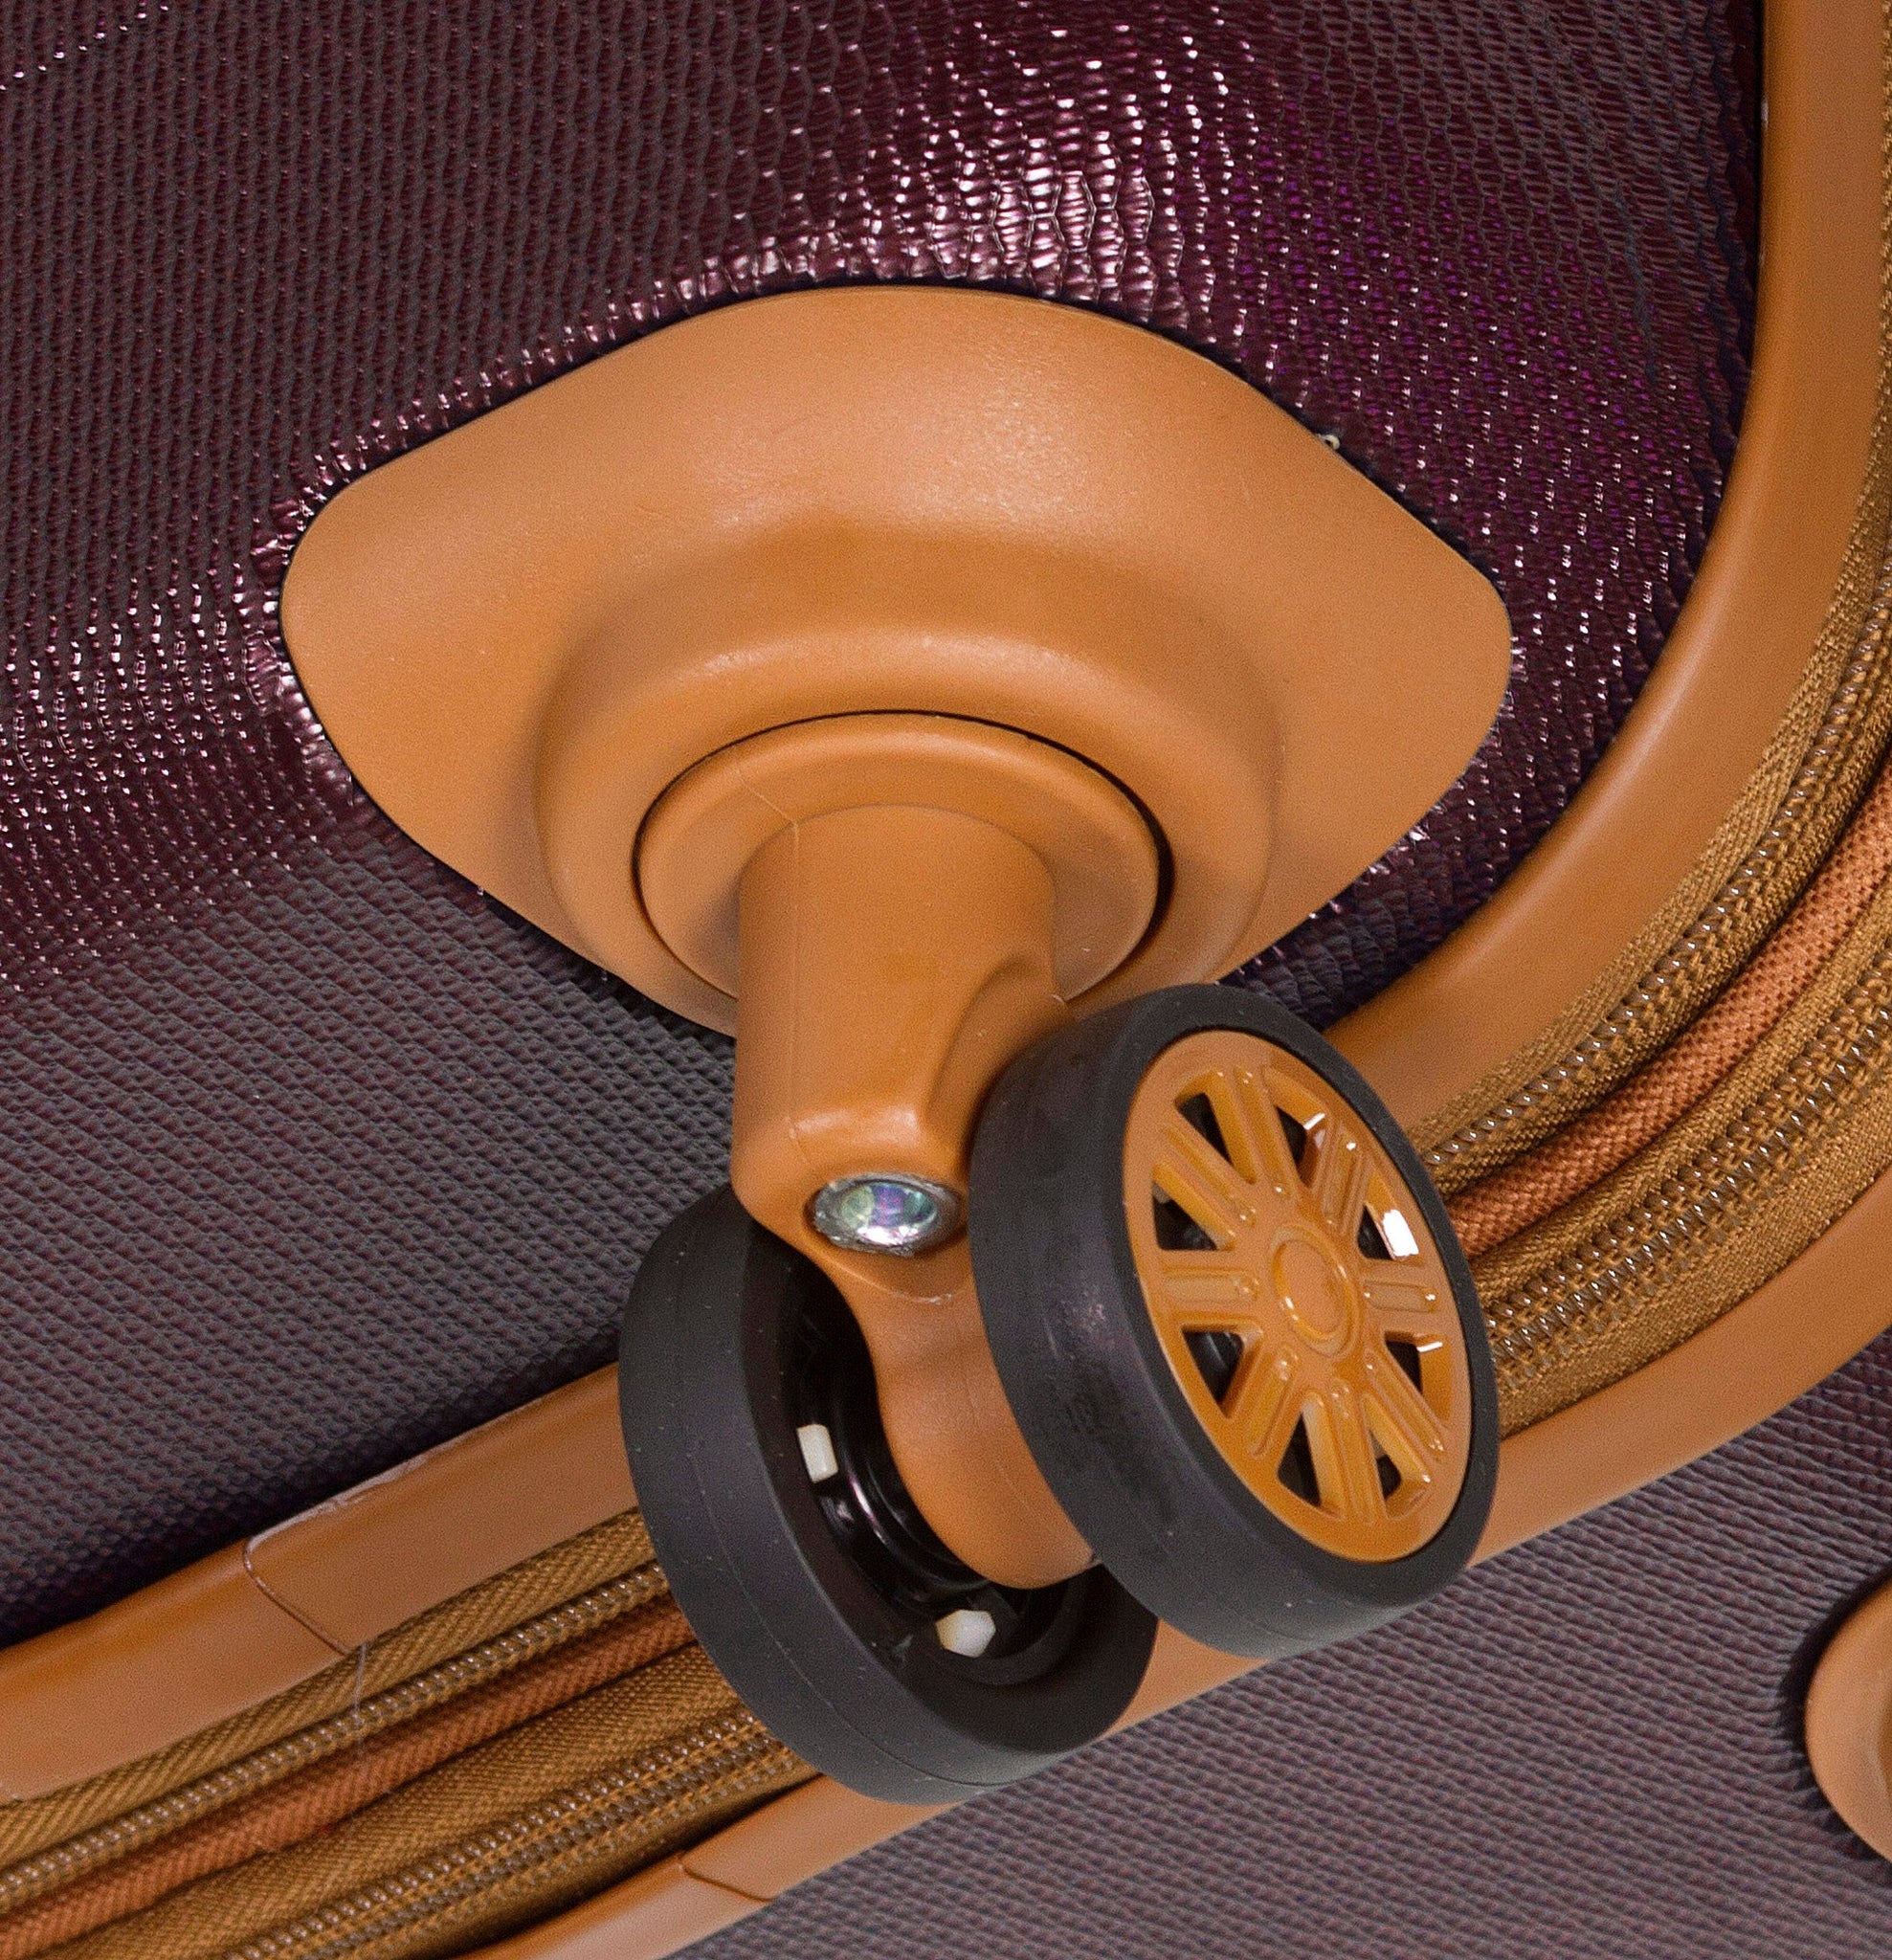 Dejuno Legion 3-PC Hardside Spinner TSA Combination Lock Luggage Set